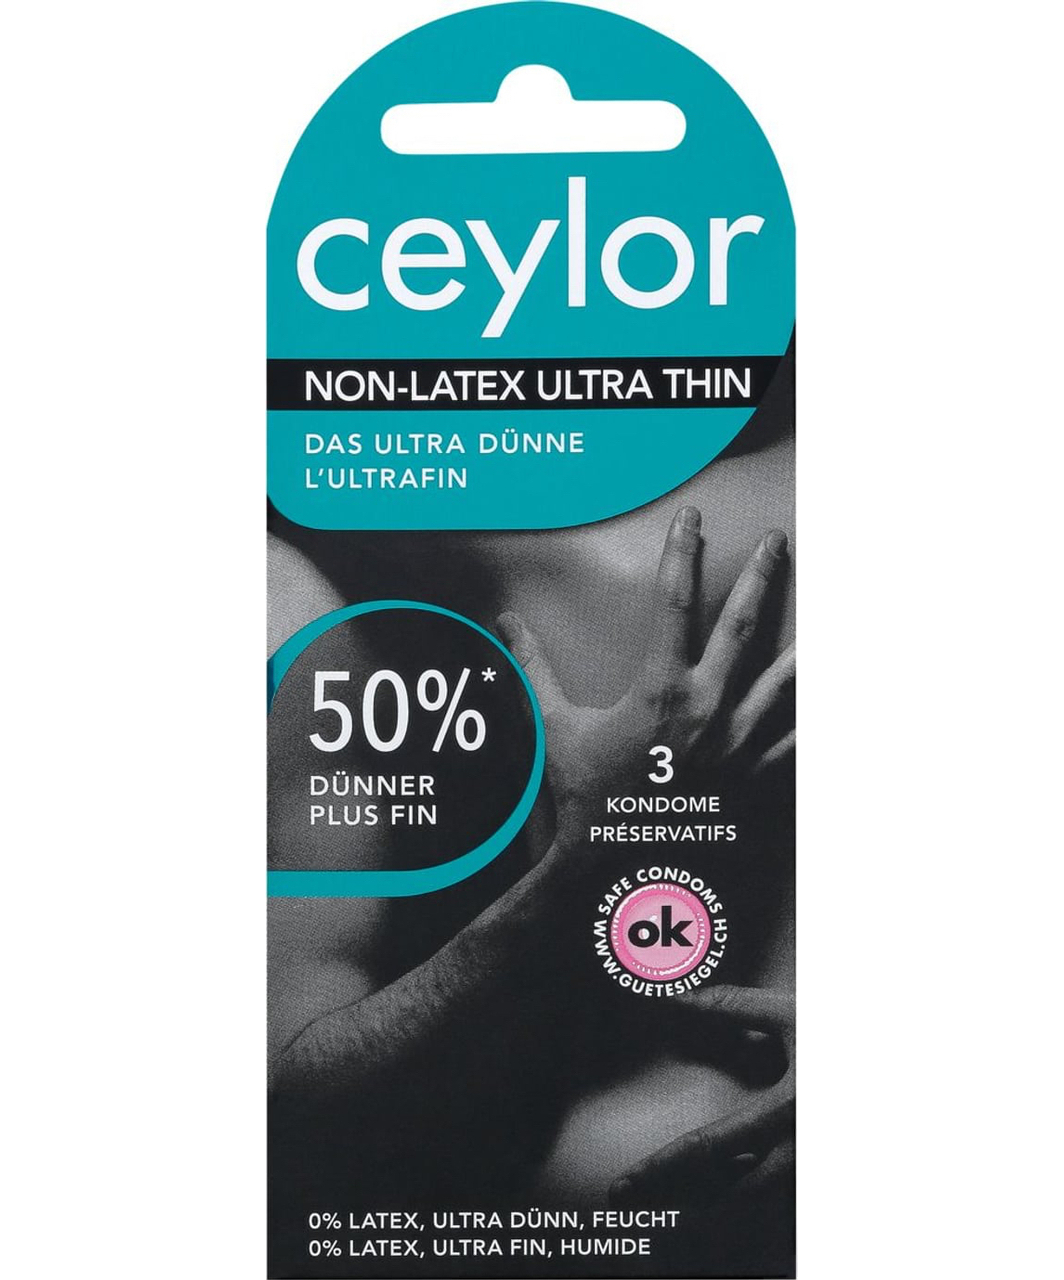 Ceylor Non-Latex Ultra Thin презервативы (3 / 6 шт.)